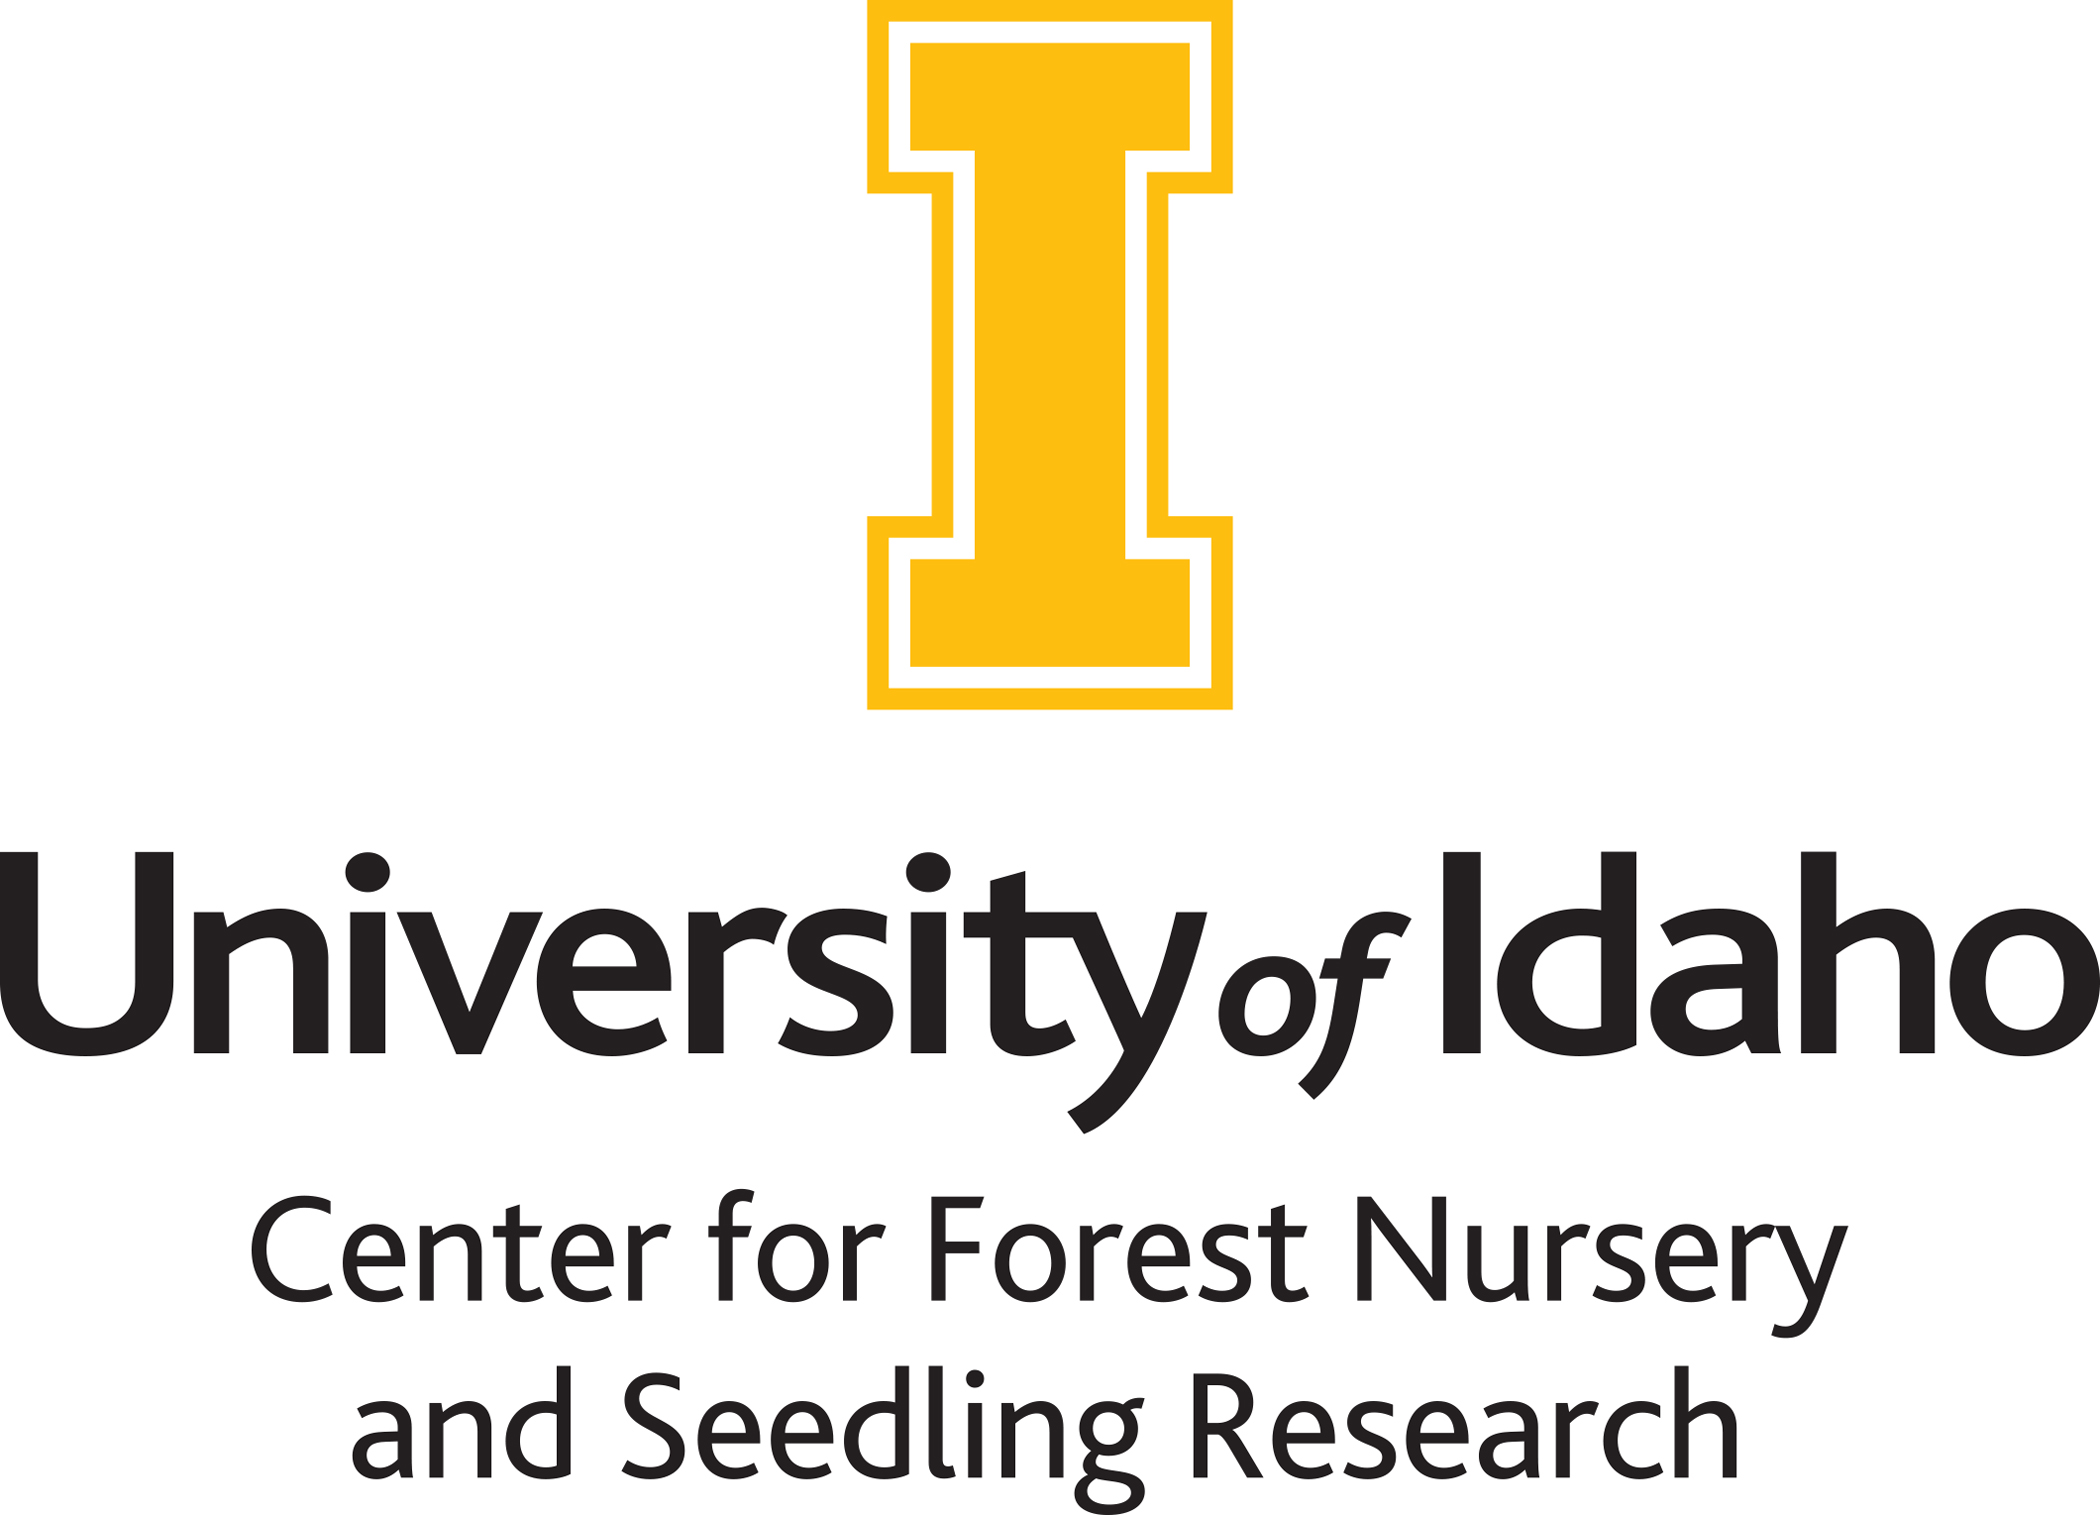 Pitkin Forest Nursery, University of Idaho Seeks Interns for Summer 2022